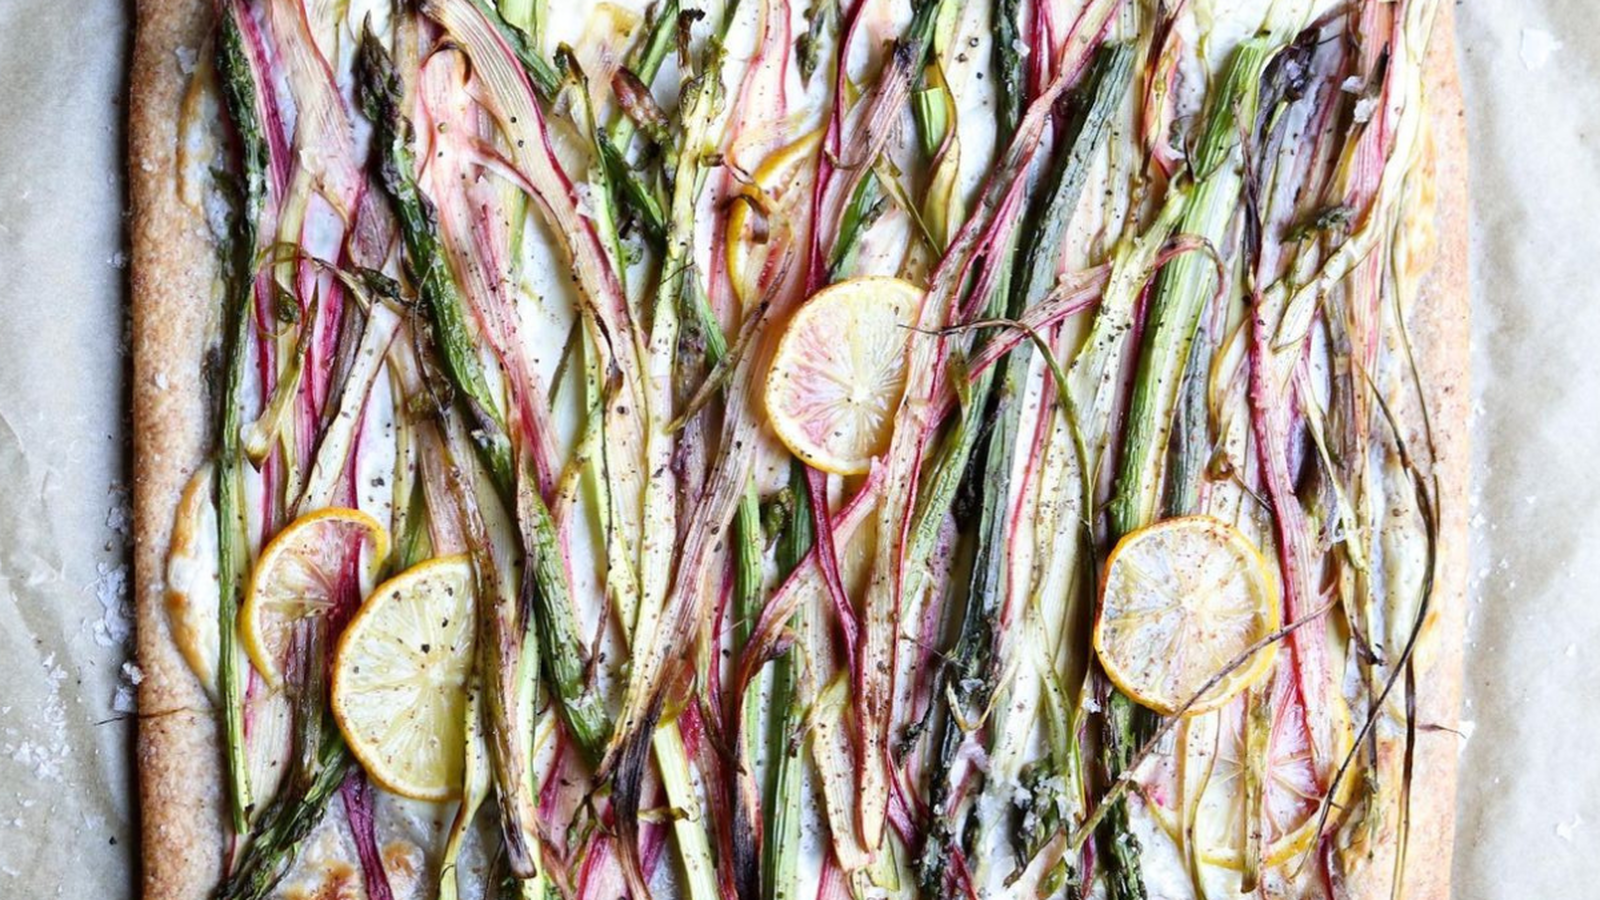 Image of Asparagus and Rhubarb Tart